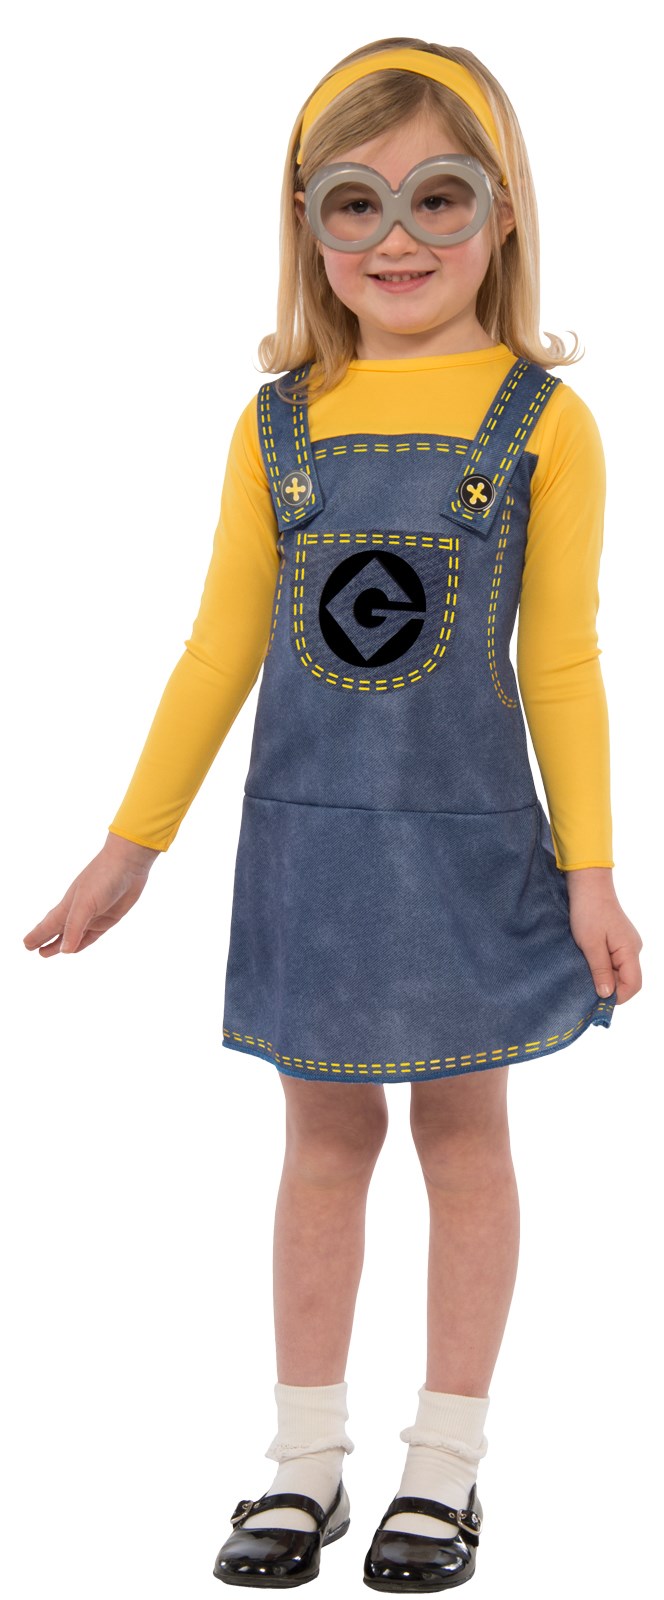 Minions Movie: Girls Minion Costume Kit